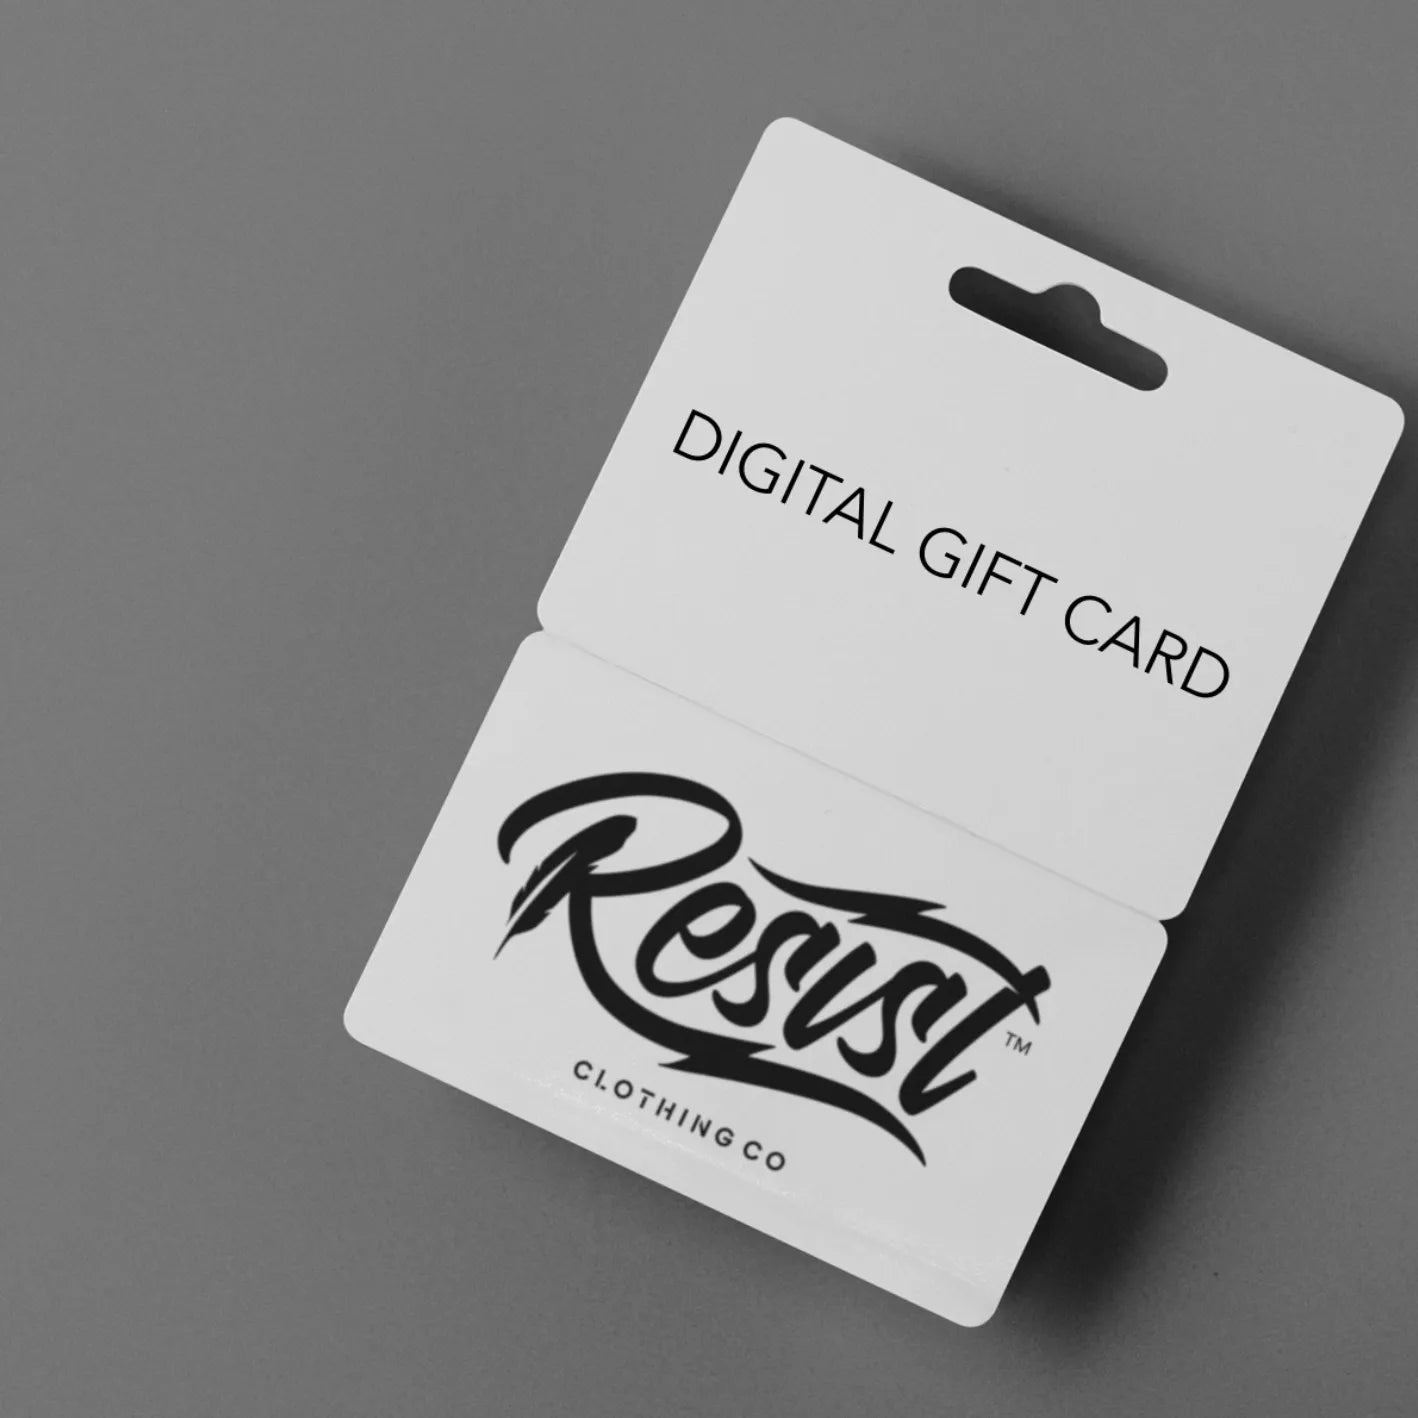 RESIST Clothing Co. Digital Gift Card